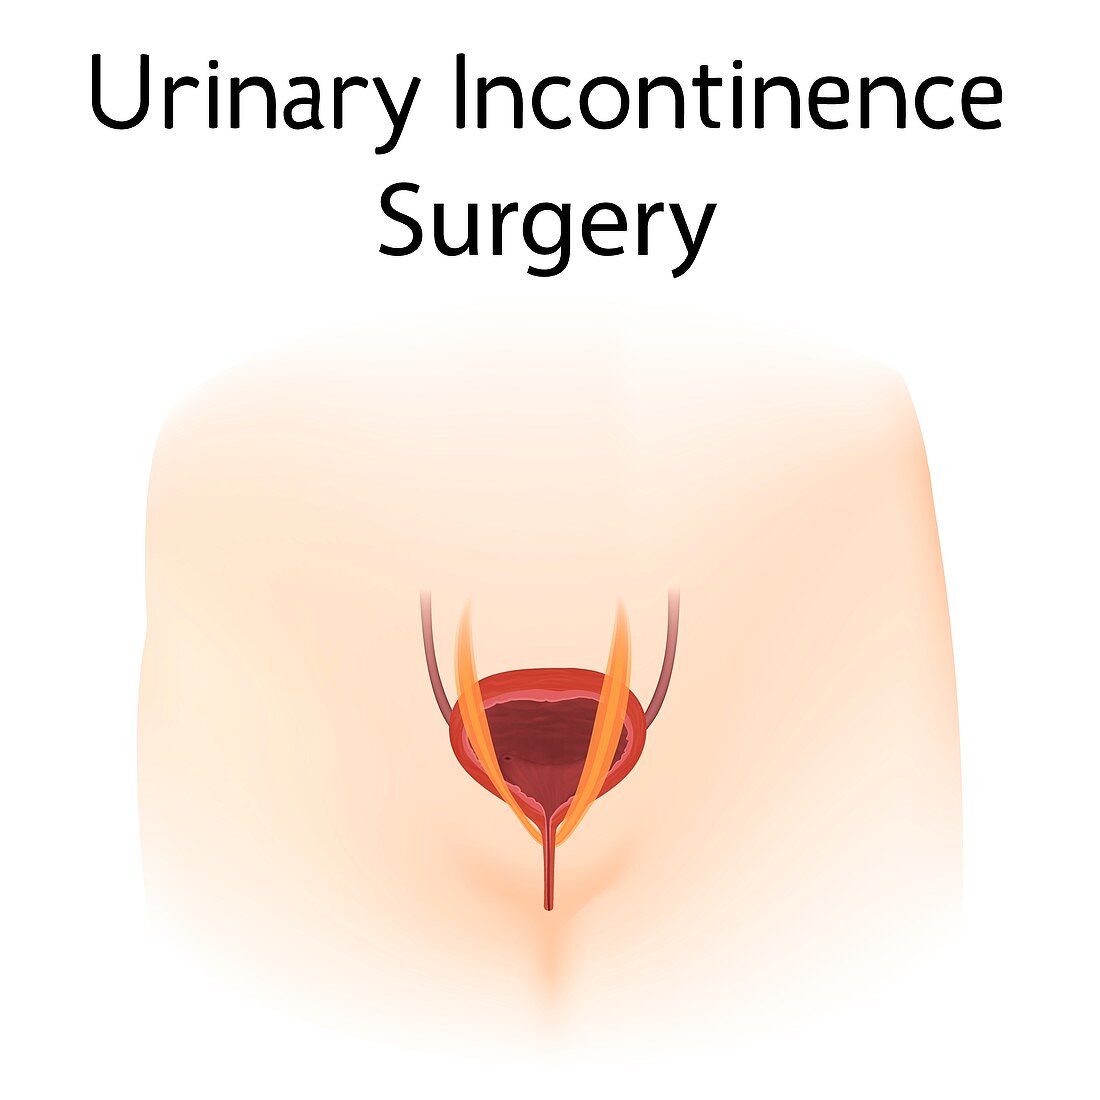 Urinary incontinence surgery, illustration